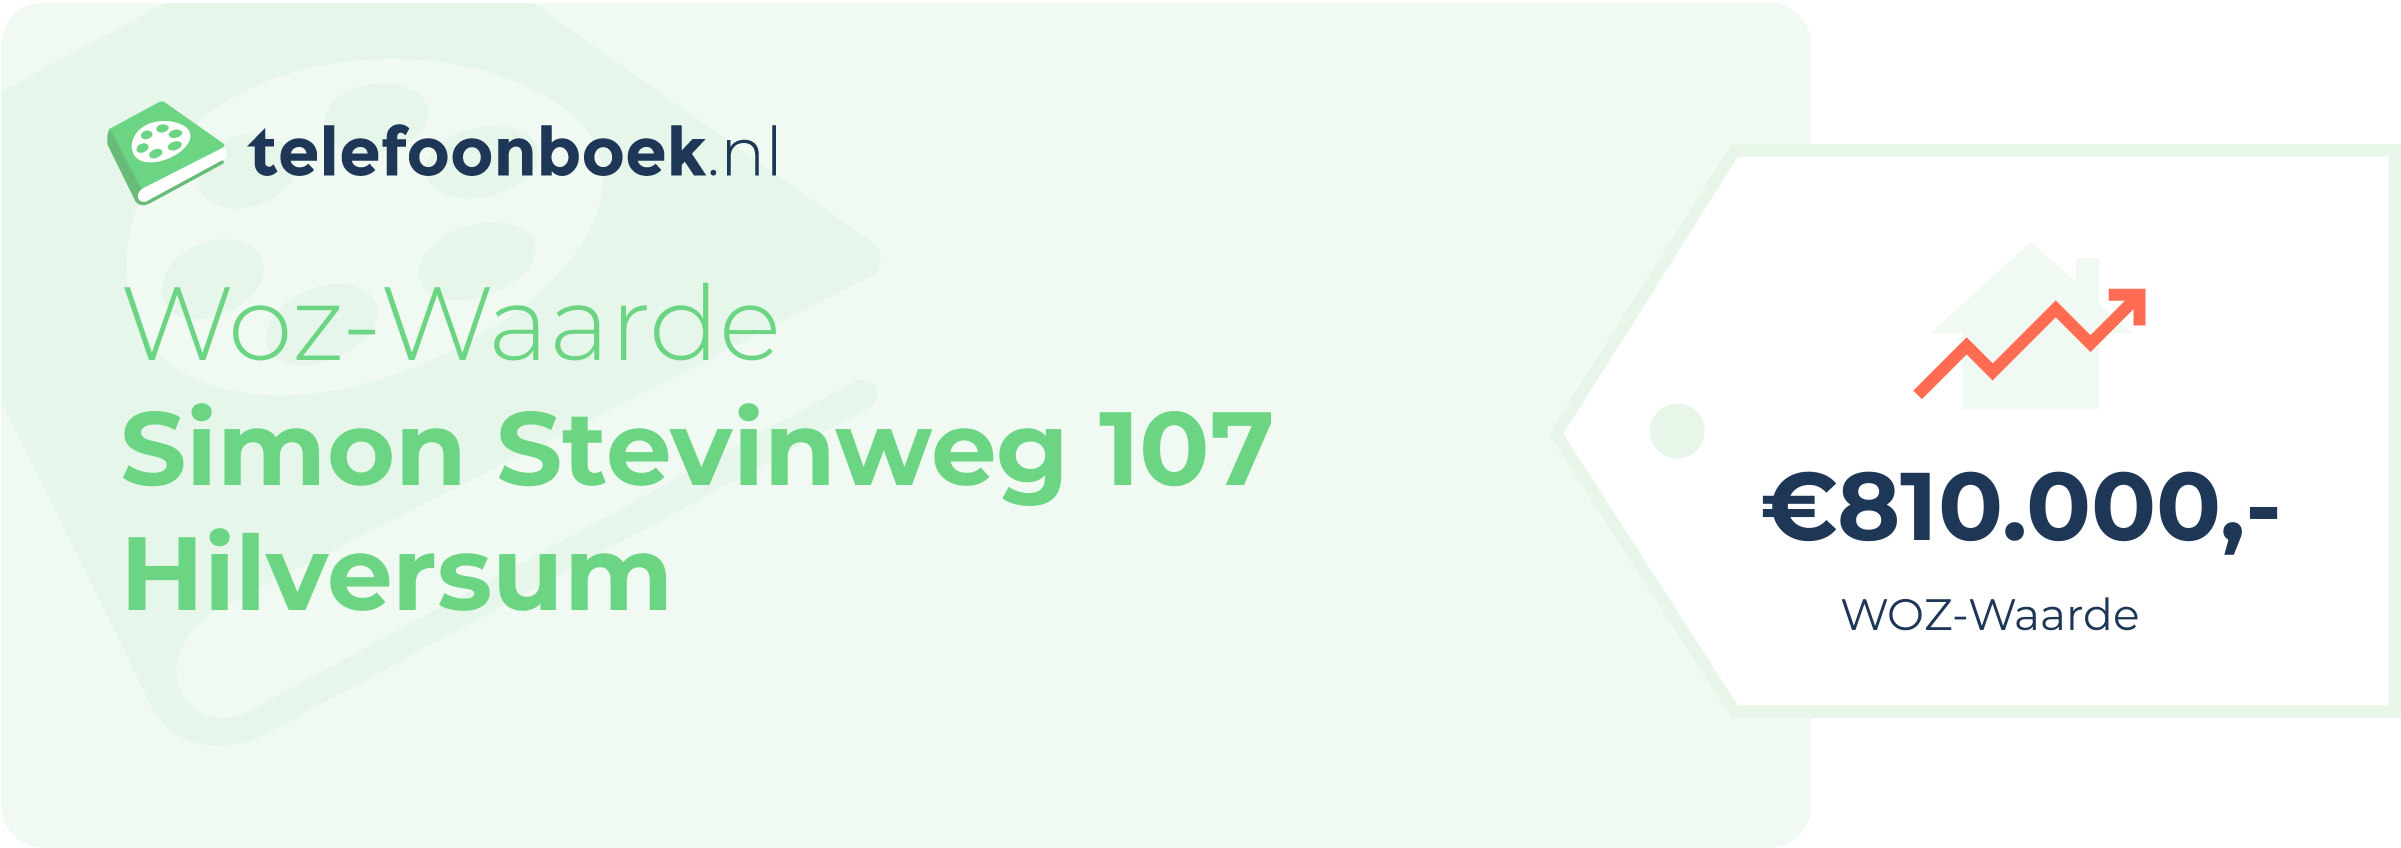 WOZ-waarde Simon Stevinweg 107 Hilversum